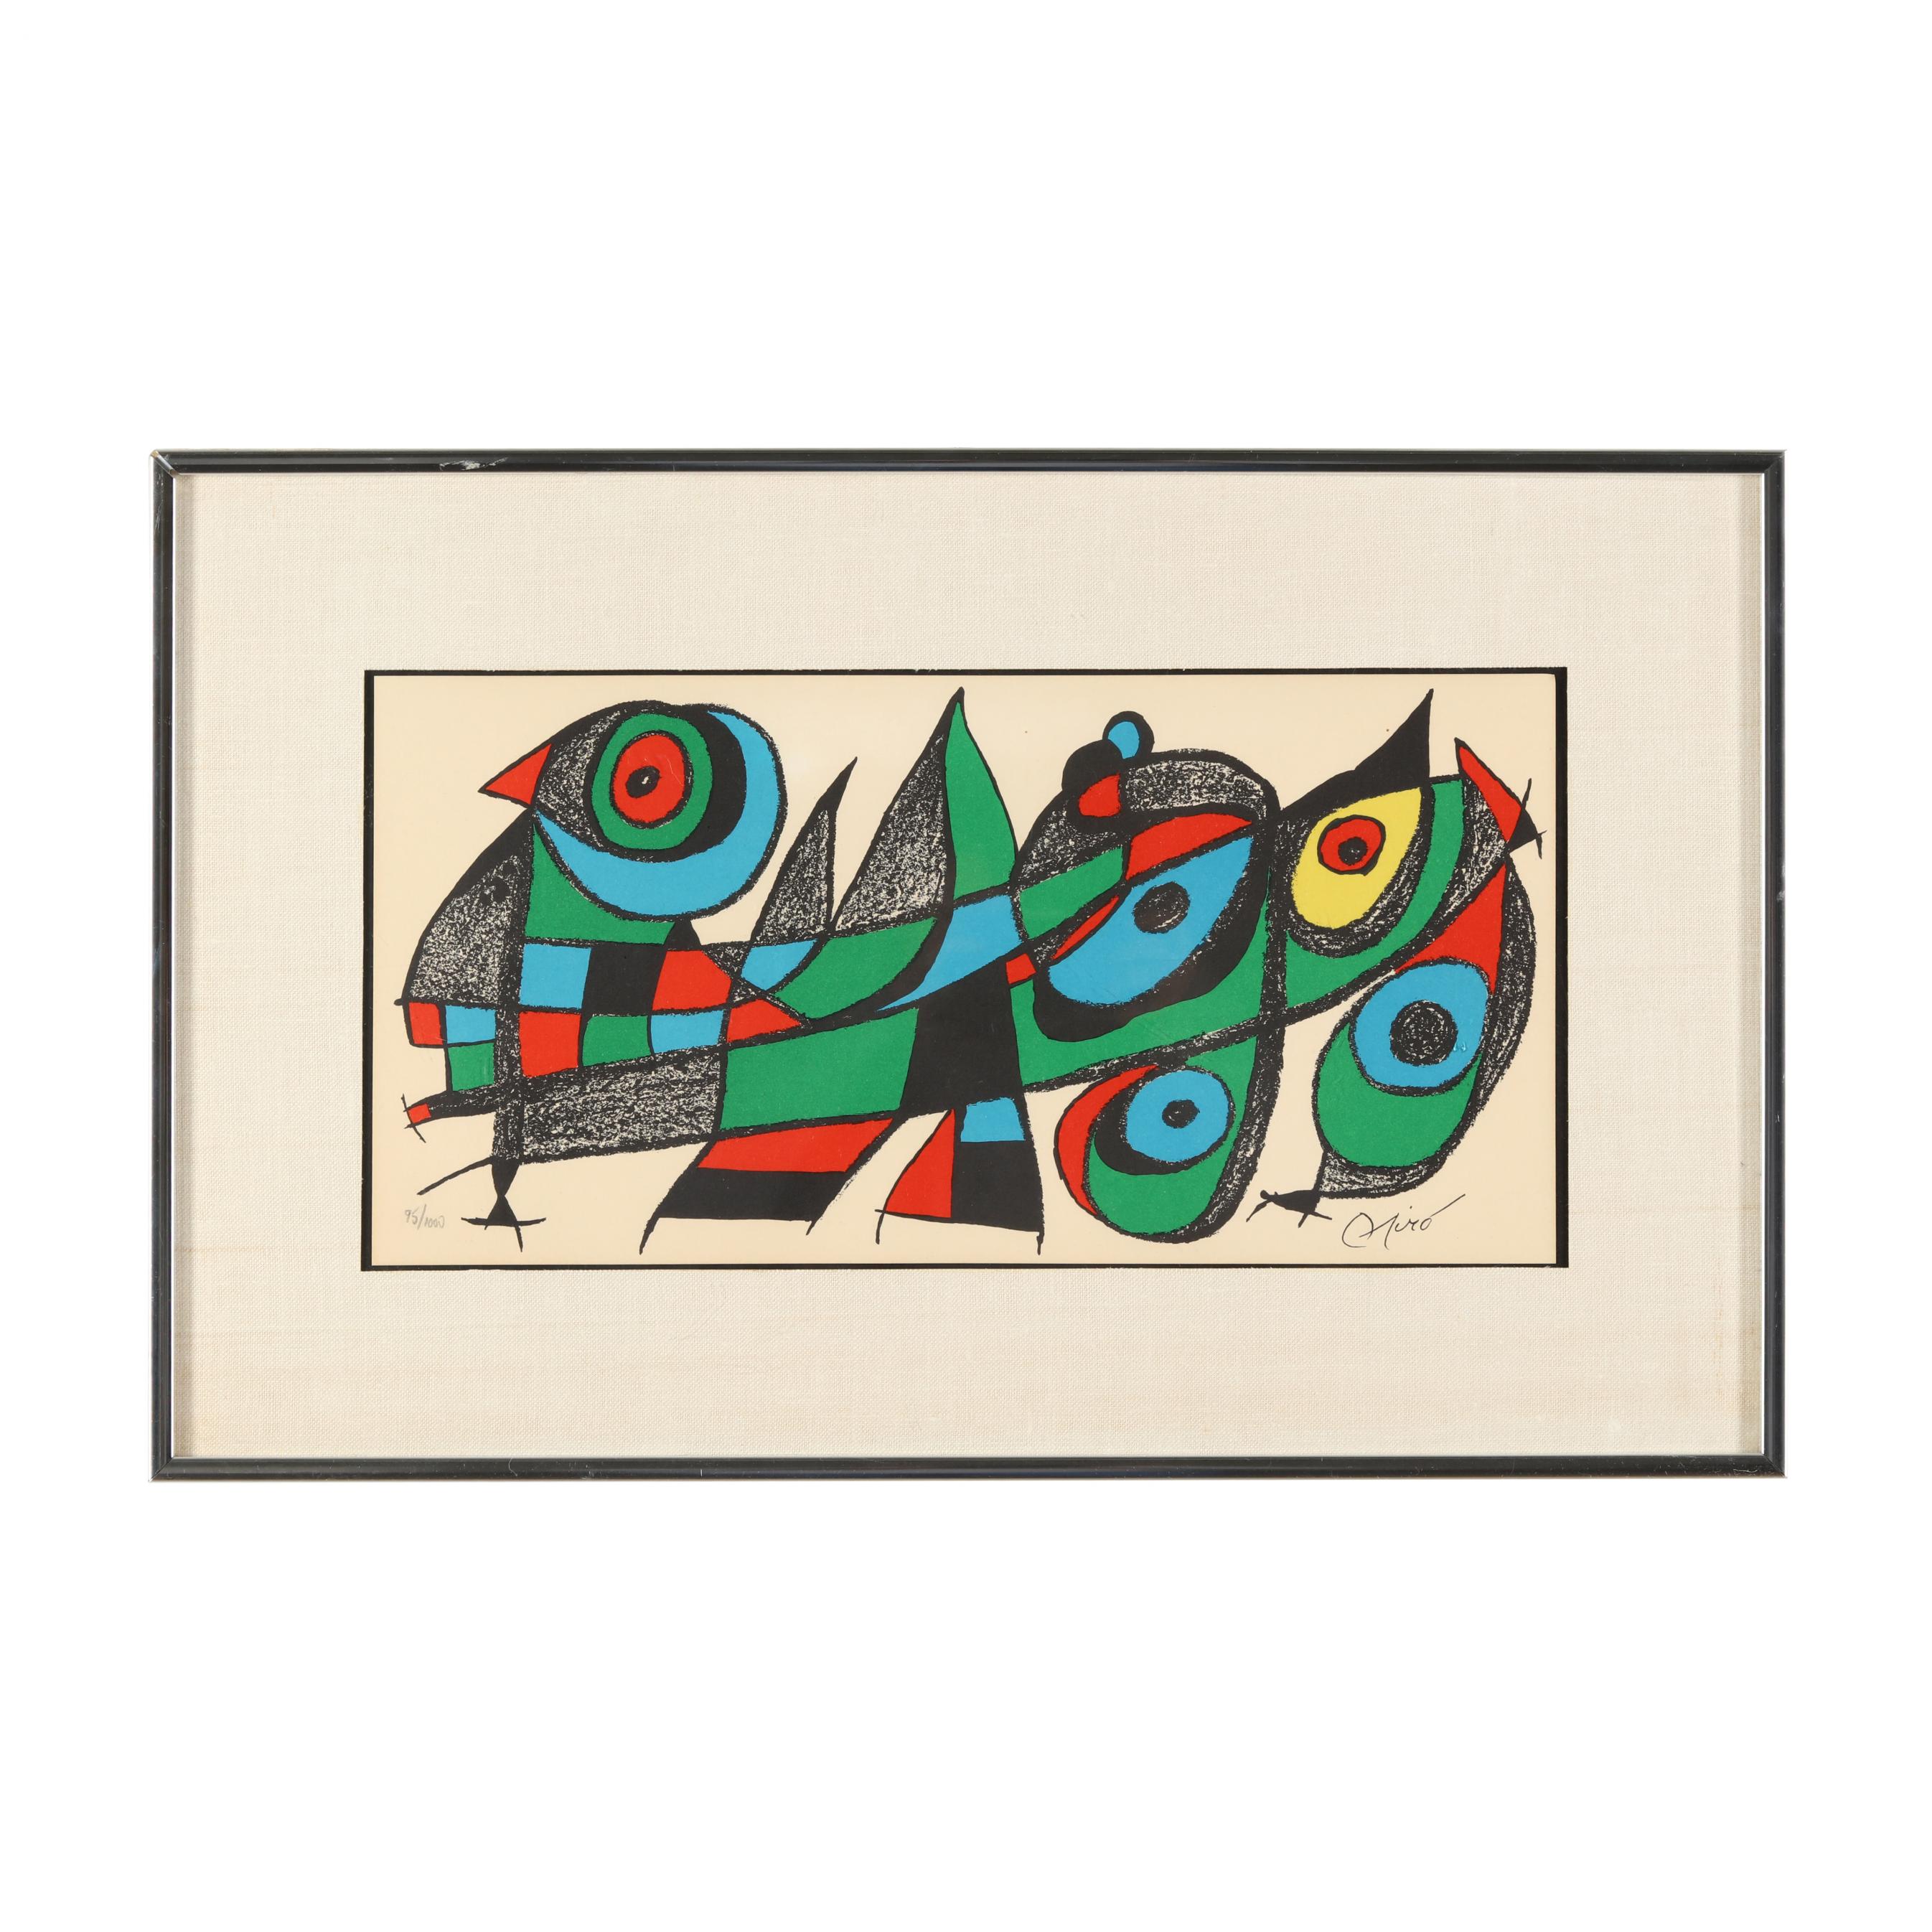 Joan Miró (Spanish, 1893-1983), Escultor - Japan (Lot 2024 